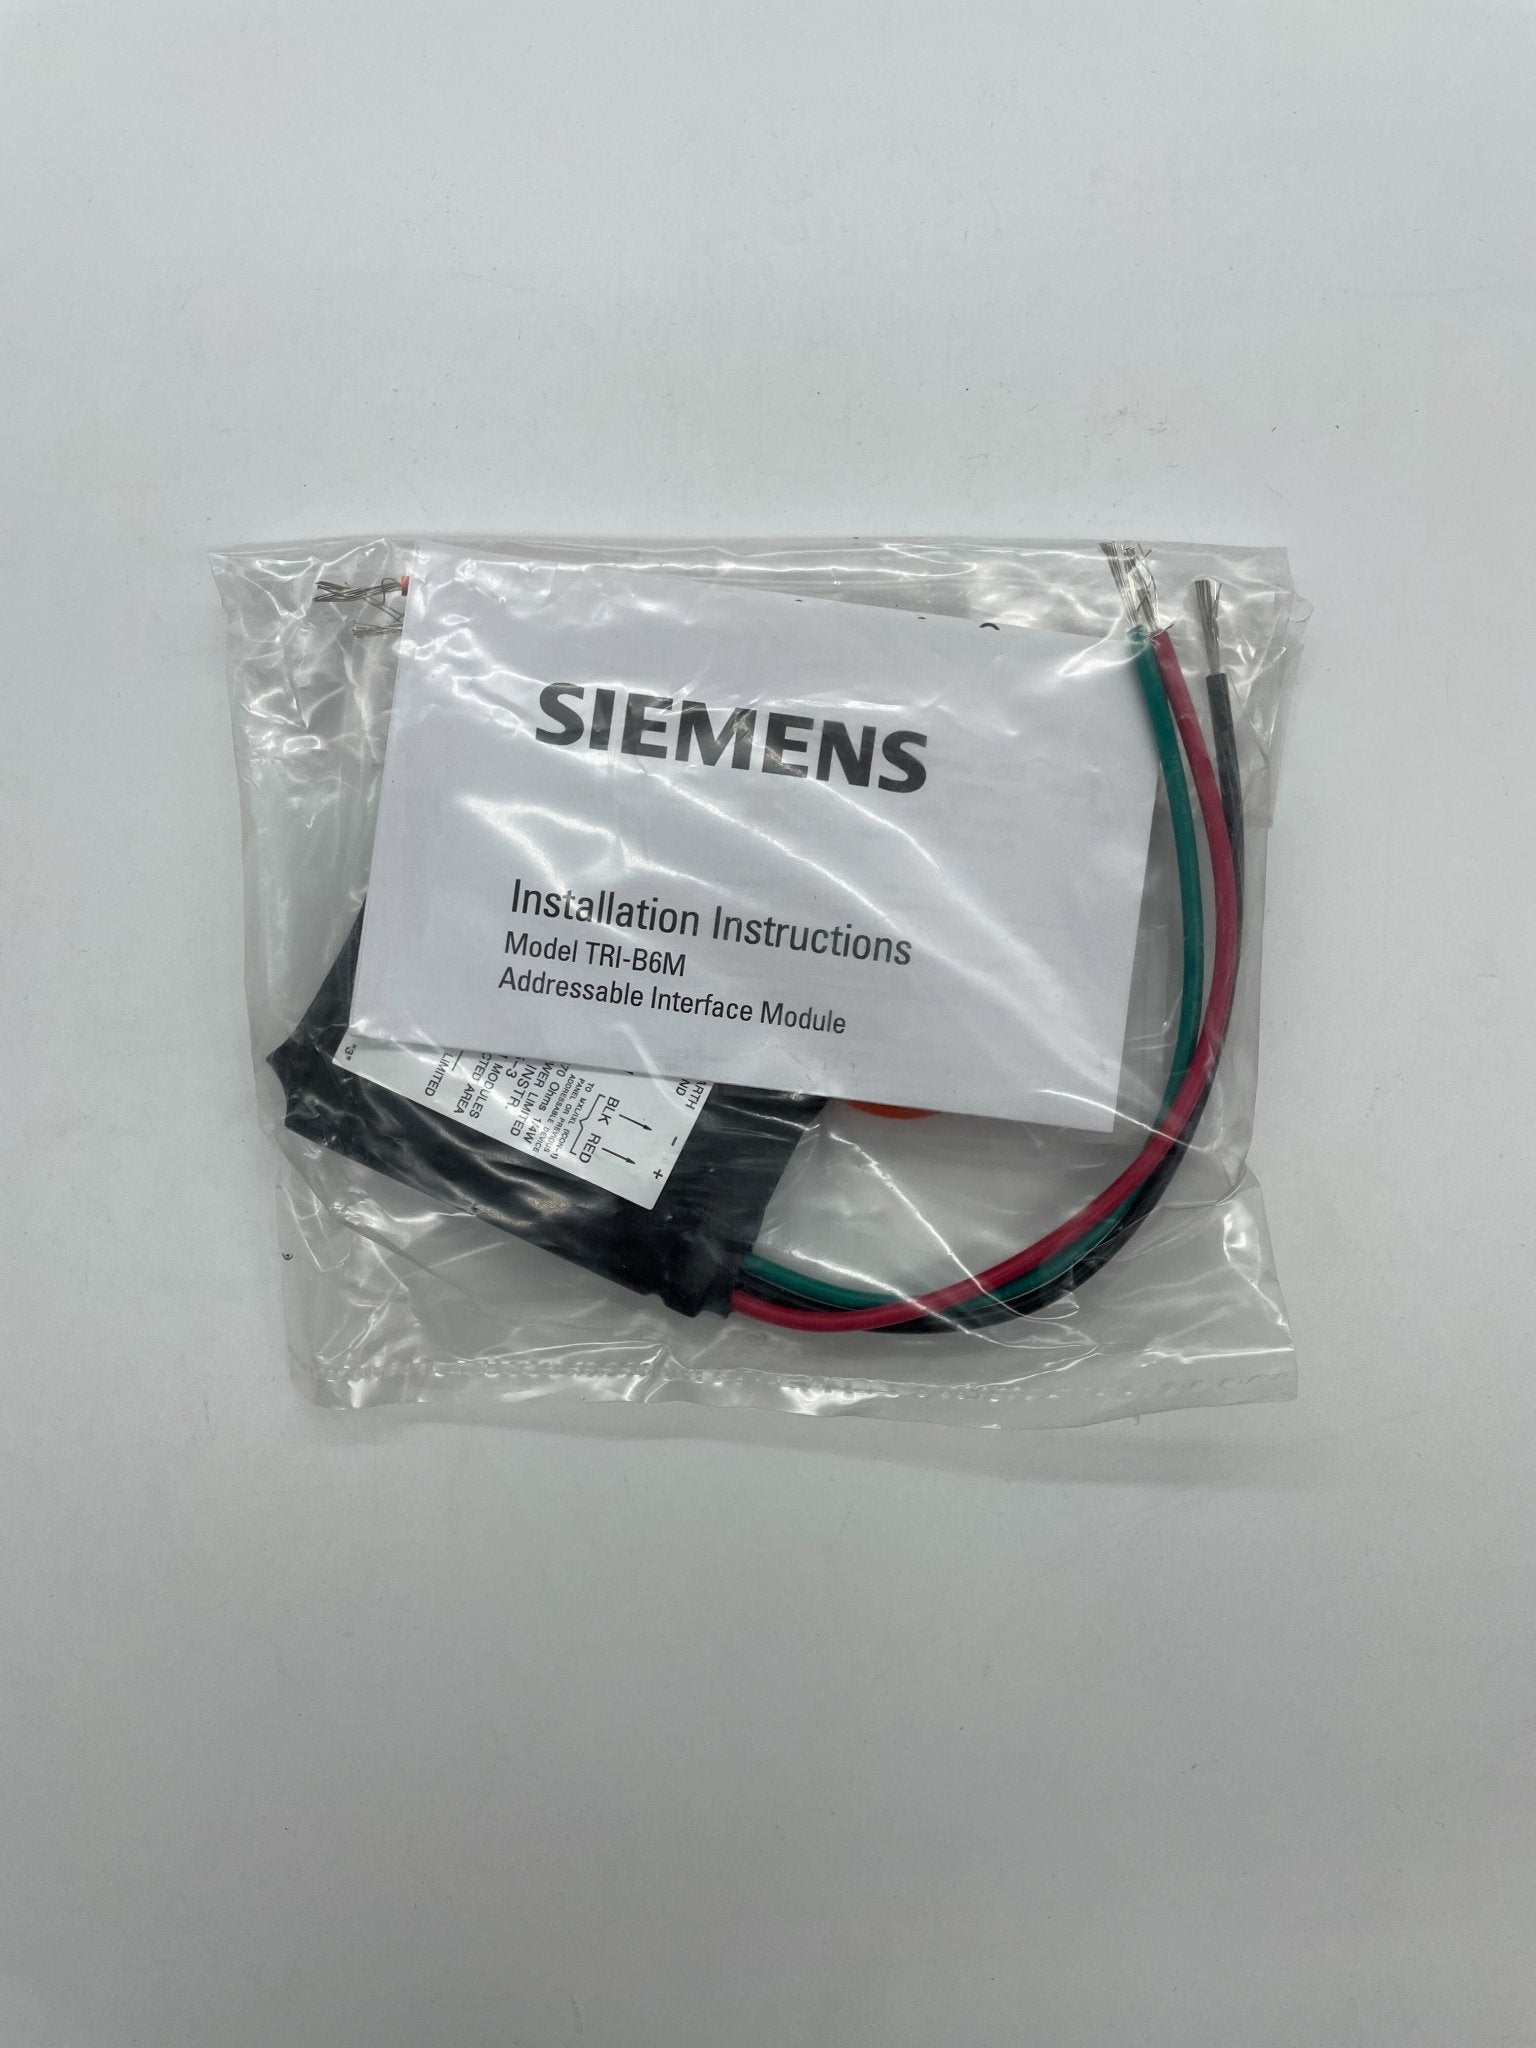 Siemens TRI-B6M - The Fire Alarm Supplier